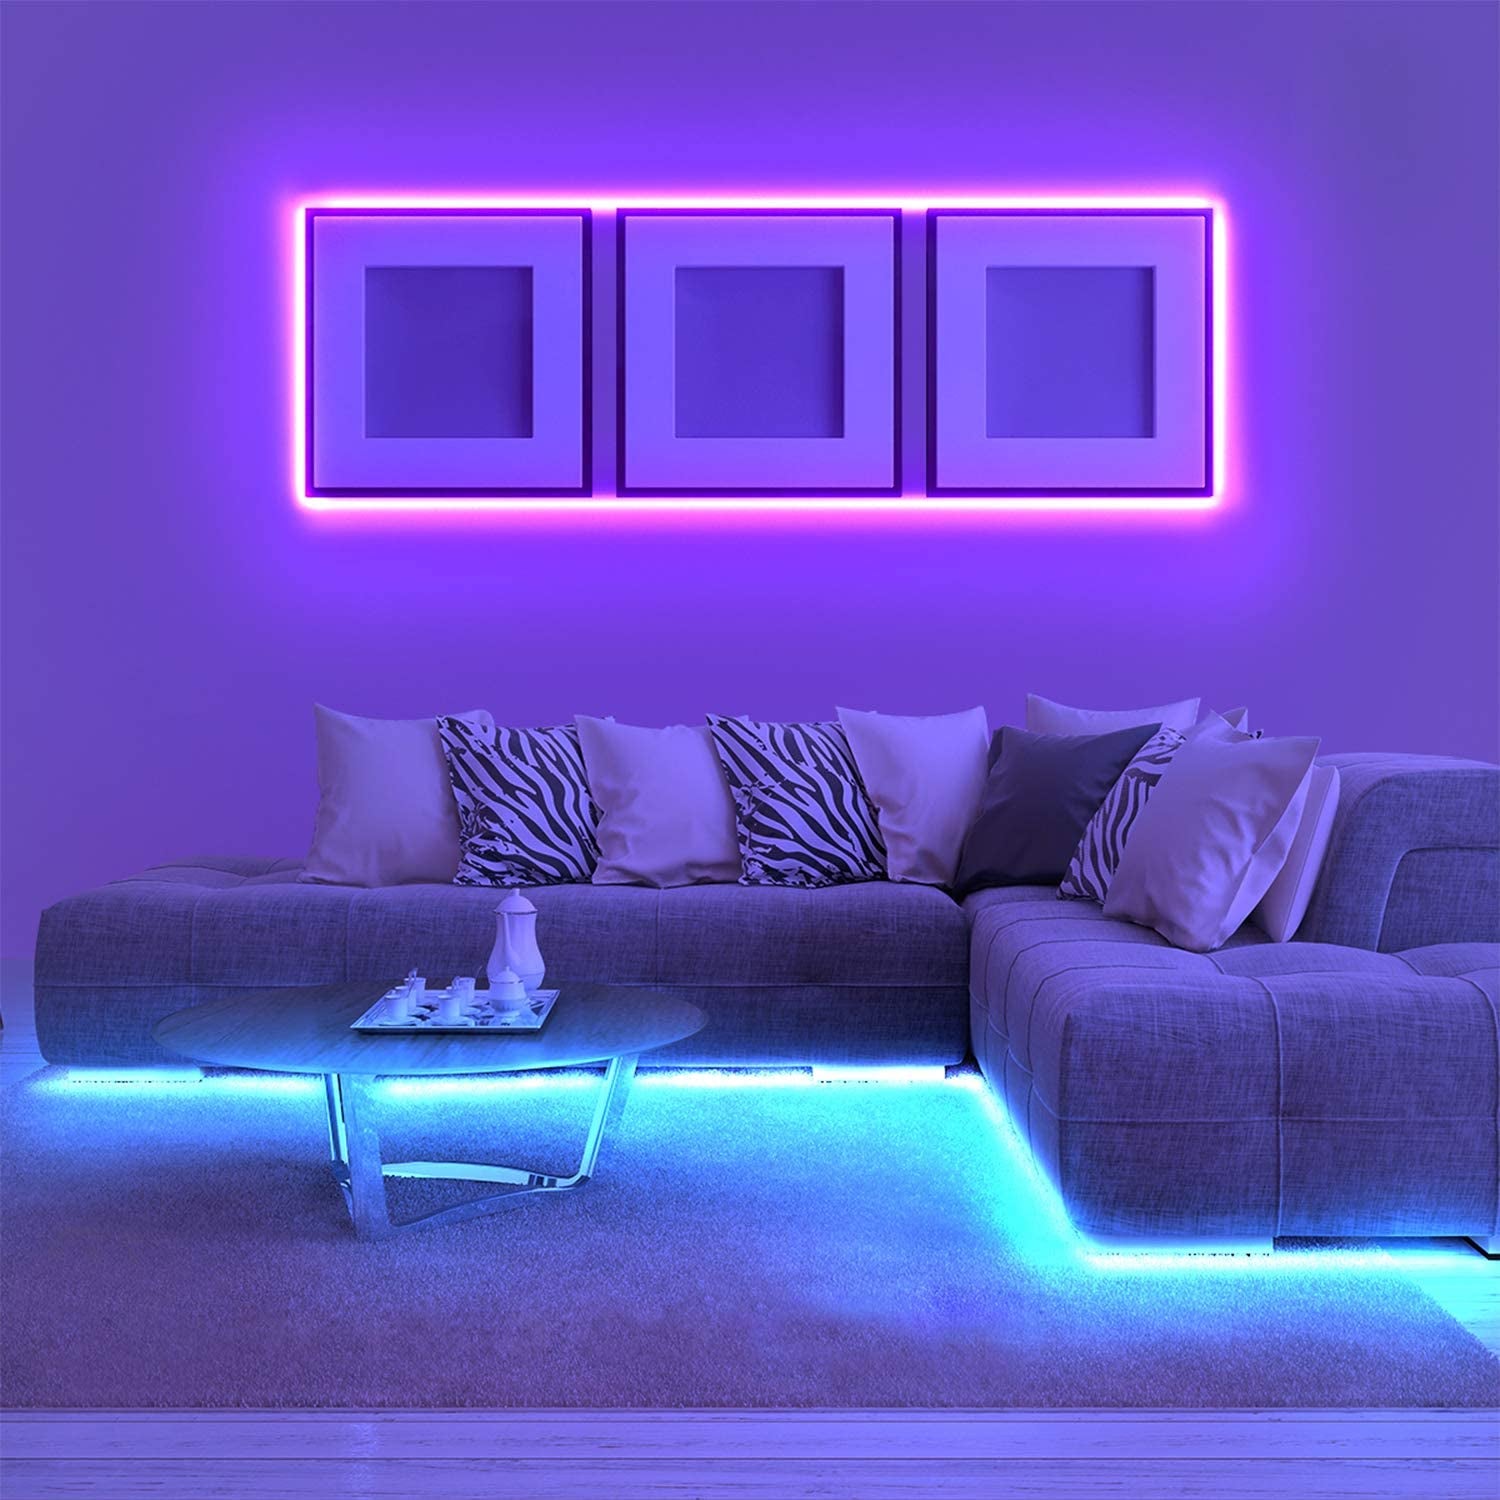 LED Strip Light 20M,Smart Bluetooth LED Lights Strip Music Sync,Rgb Colour Changing LED Strip Light with Remote,App Control,Led Light Strip for Bedroom,Home,Living Room,Kitchen,Diy Decoration